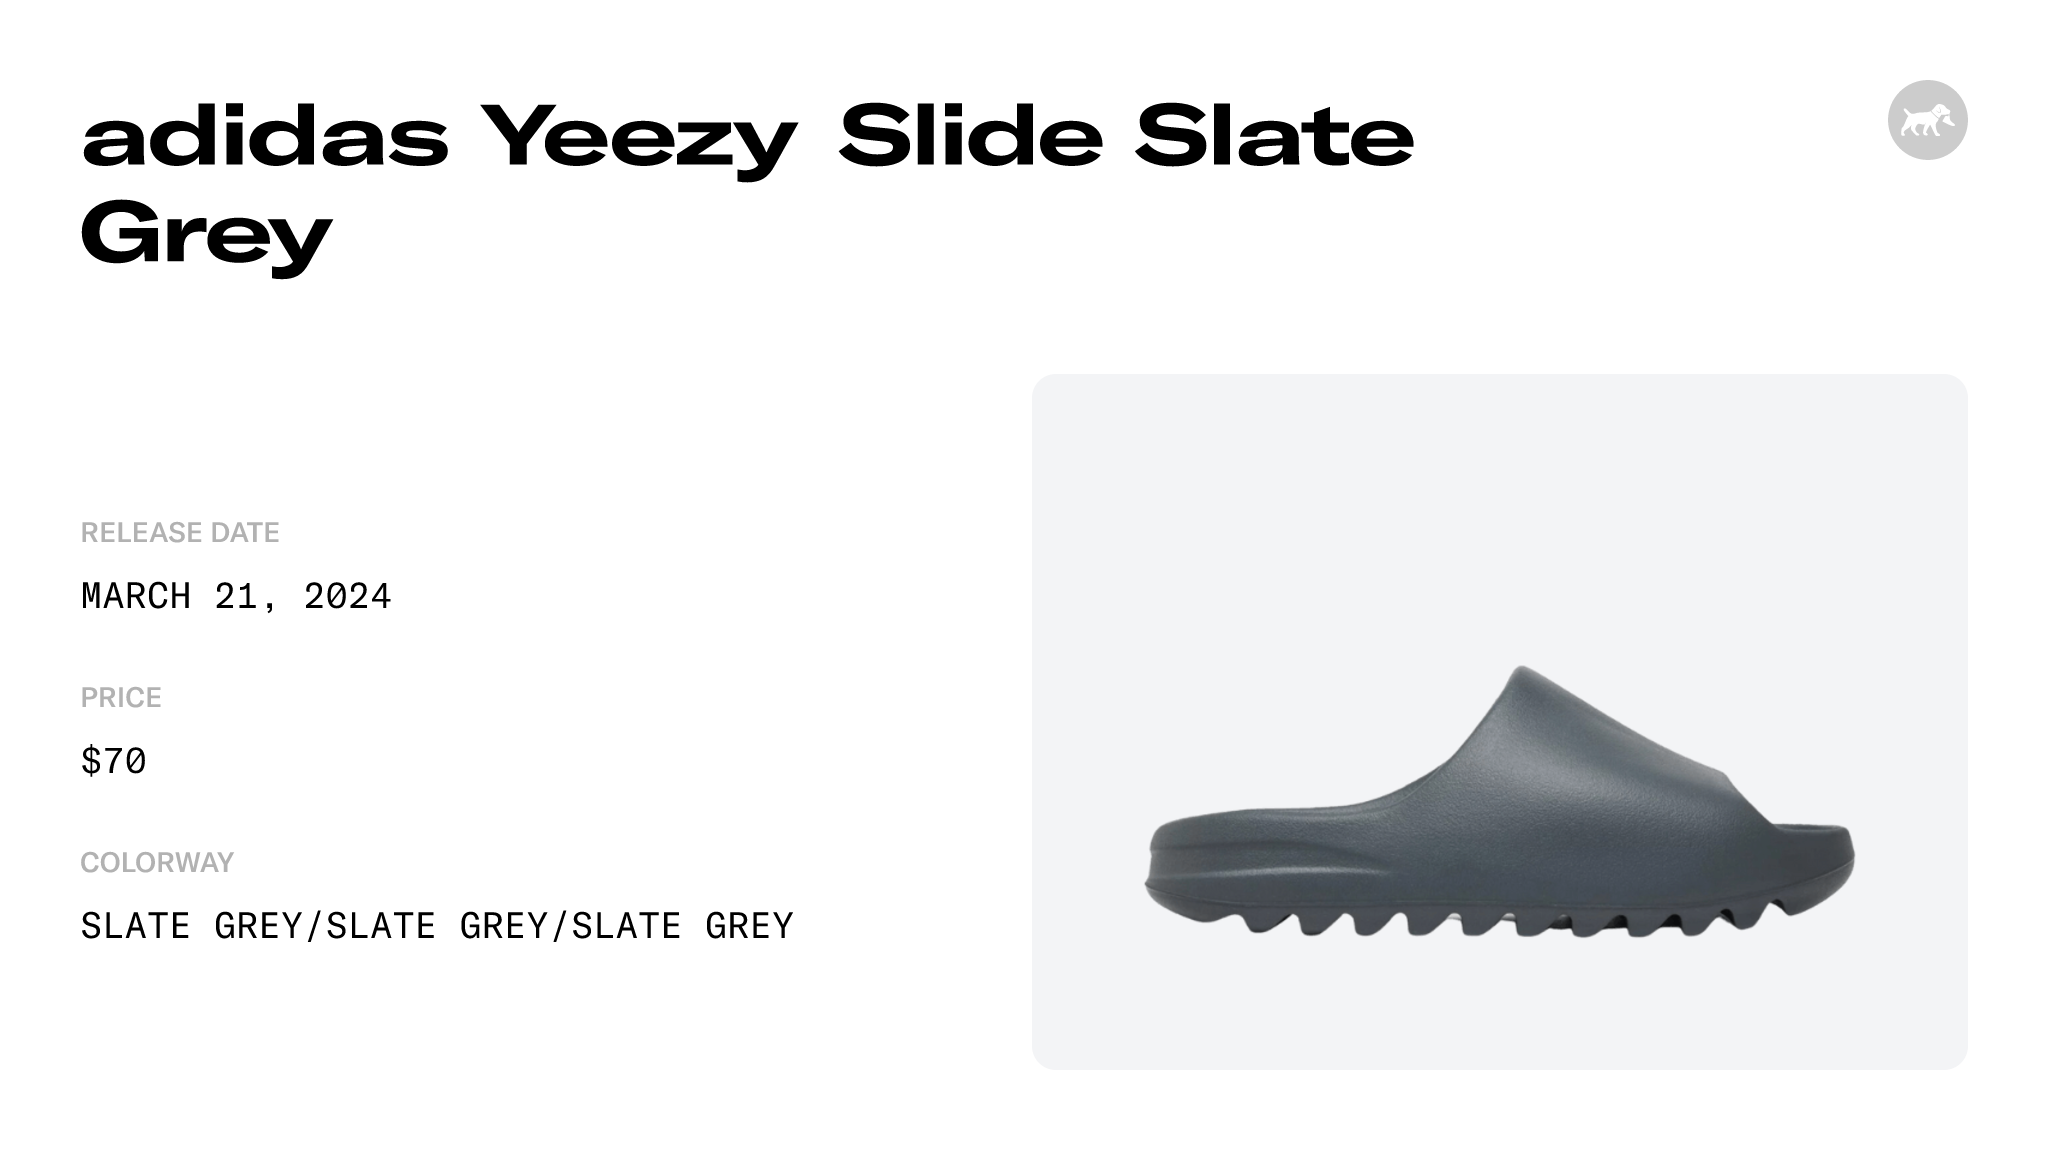 adidas Yeezy Slide Slate Grey Raffles and Release Date   Sole